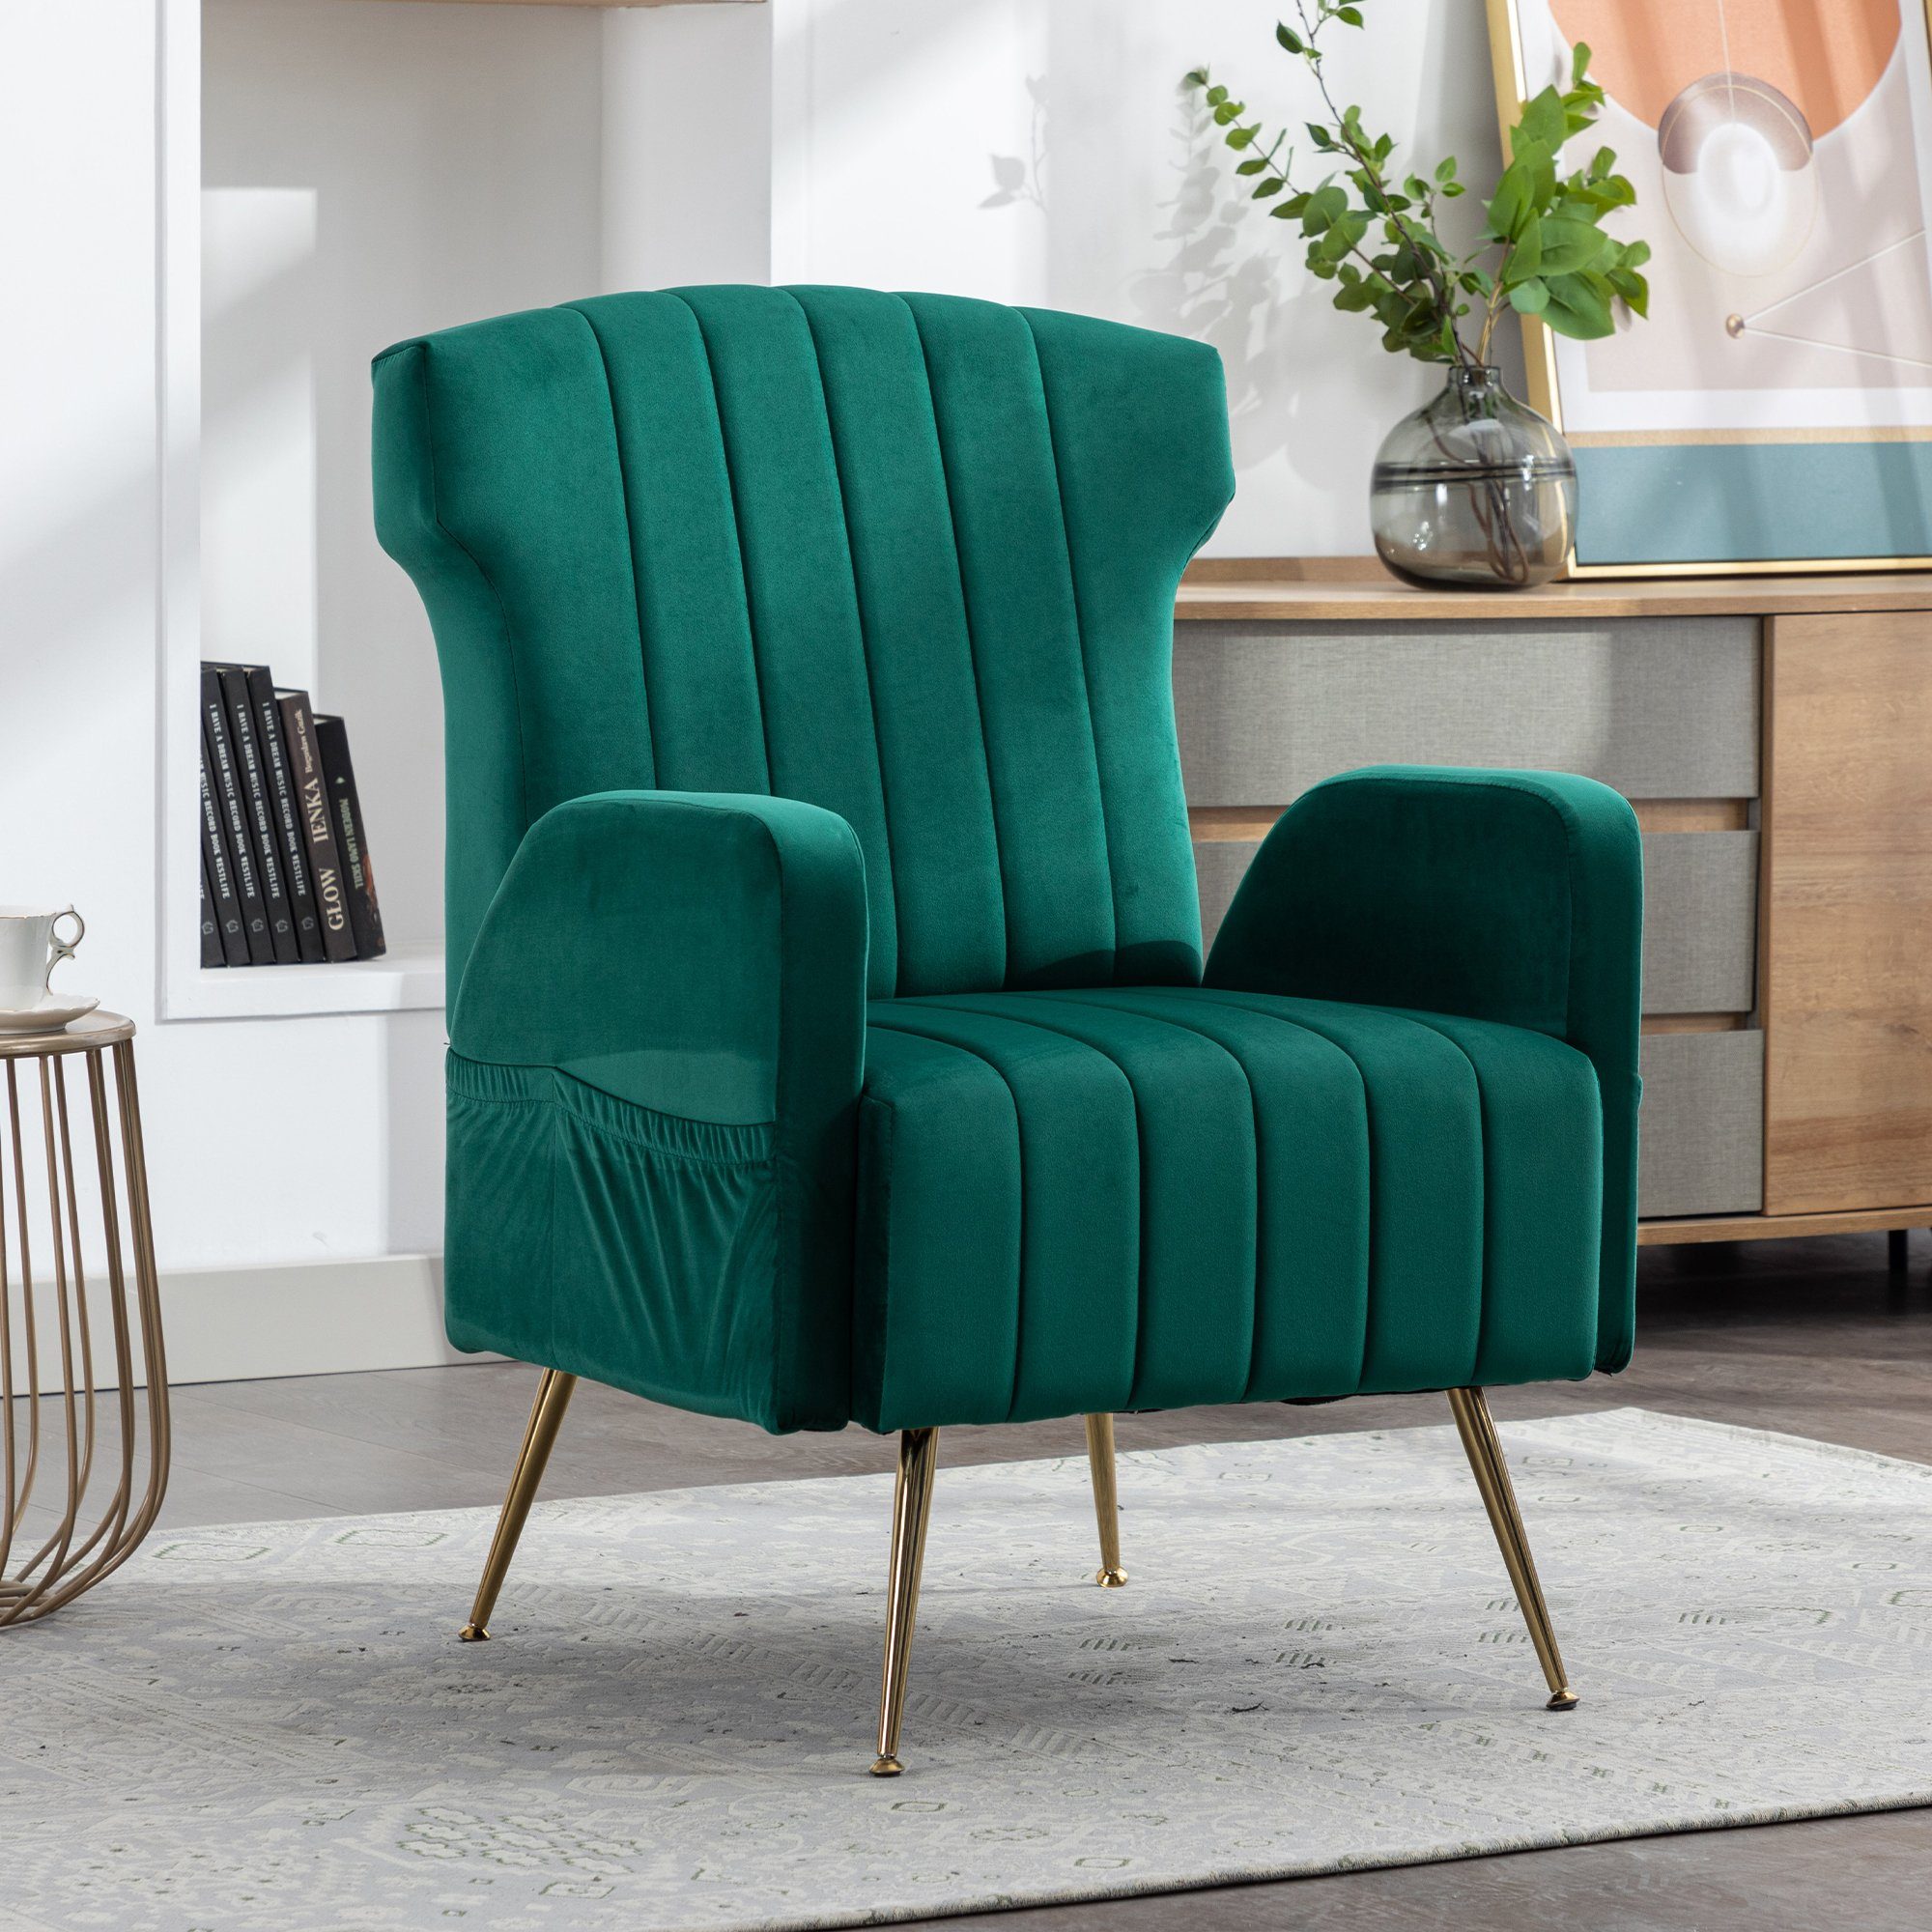 Odikalo Loungesessel Einzelsofa Akzent Stuhl Freizeit goldene Füßen gepolstert mehrfarbig Grün